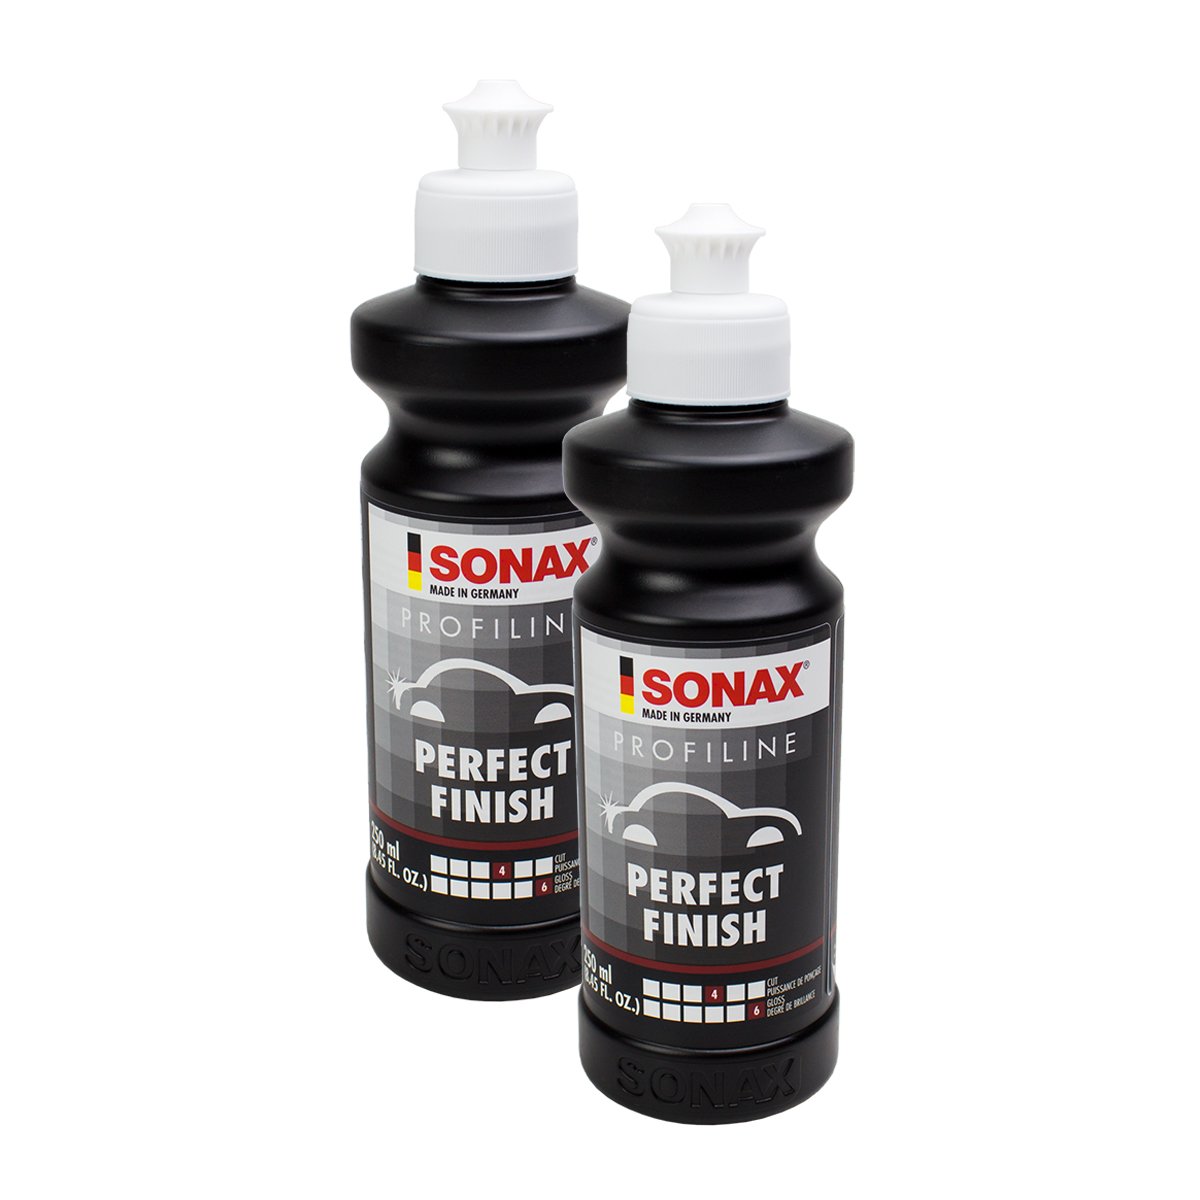 SONAX 2X 02241410 PROFILINE PerfectFinish silikonfrei Lackpolitur 250ml von SONAX